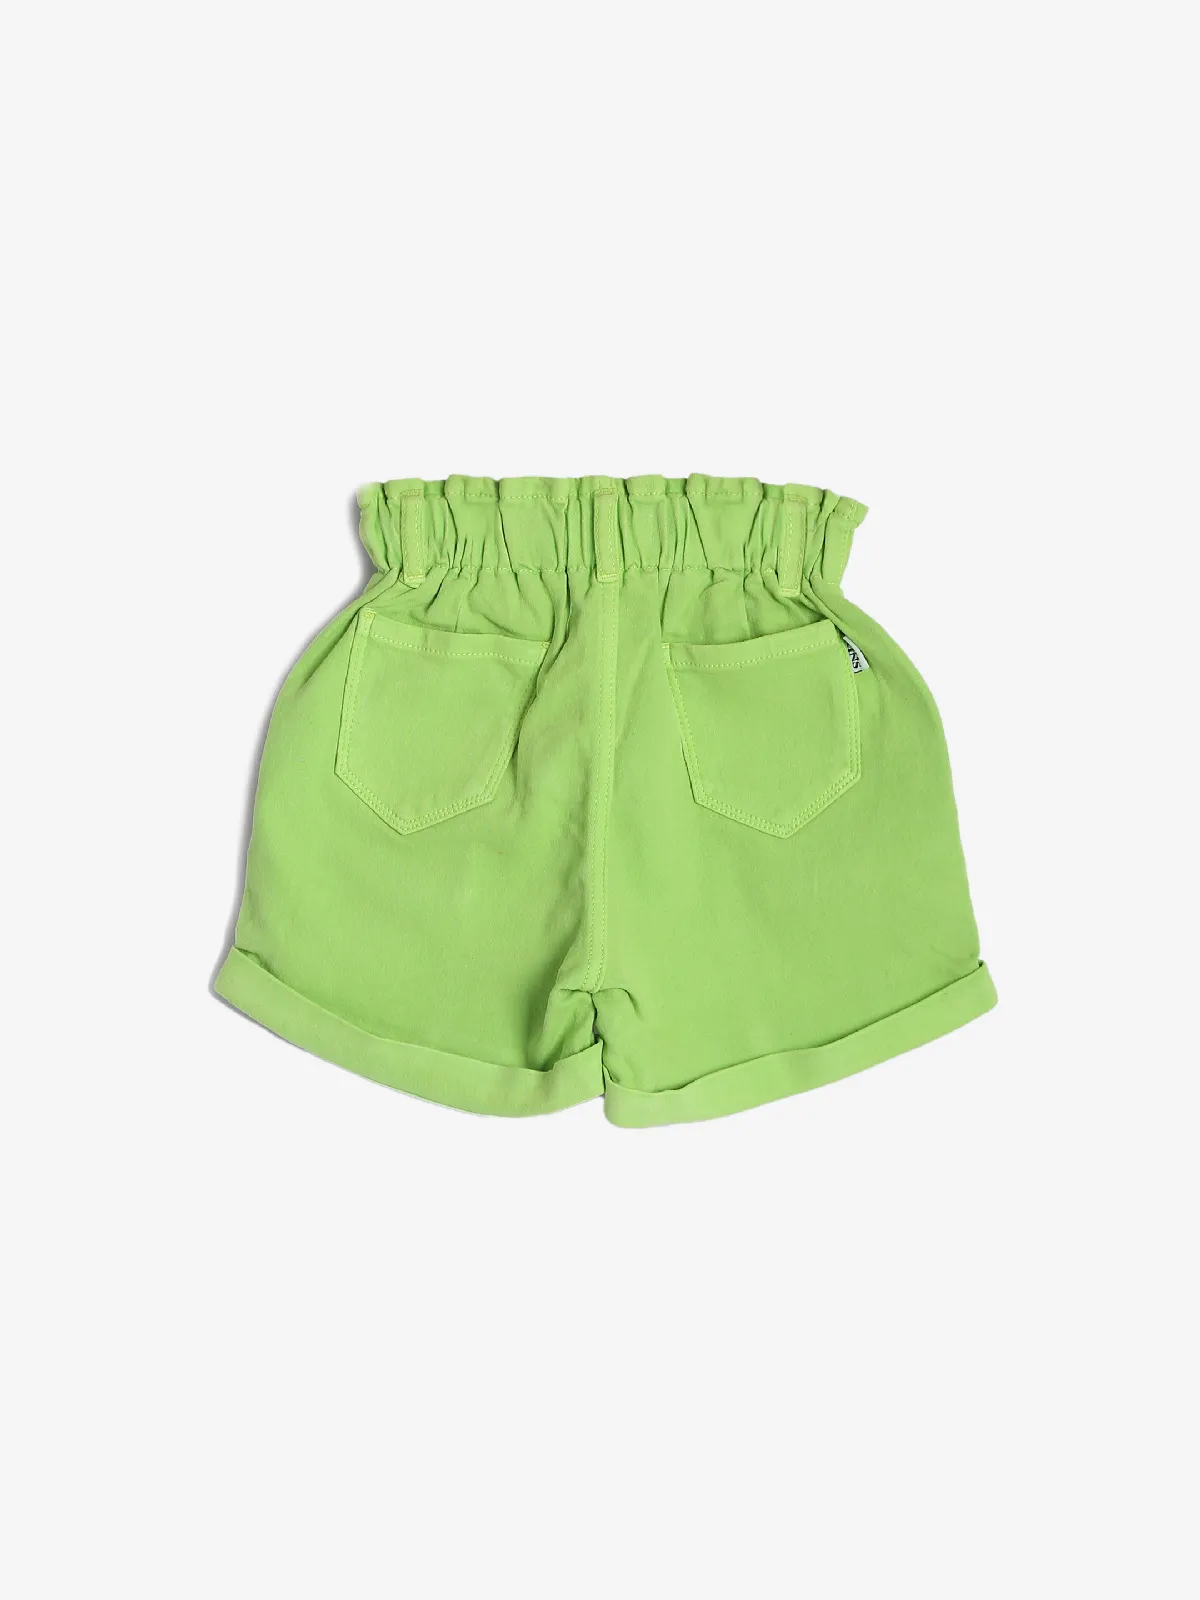 Lovekins solid green cotton shorts